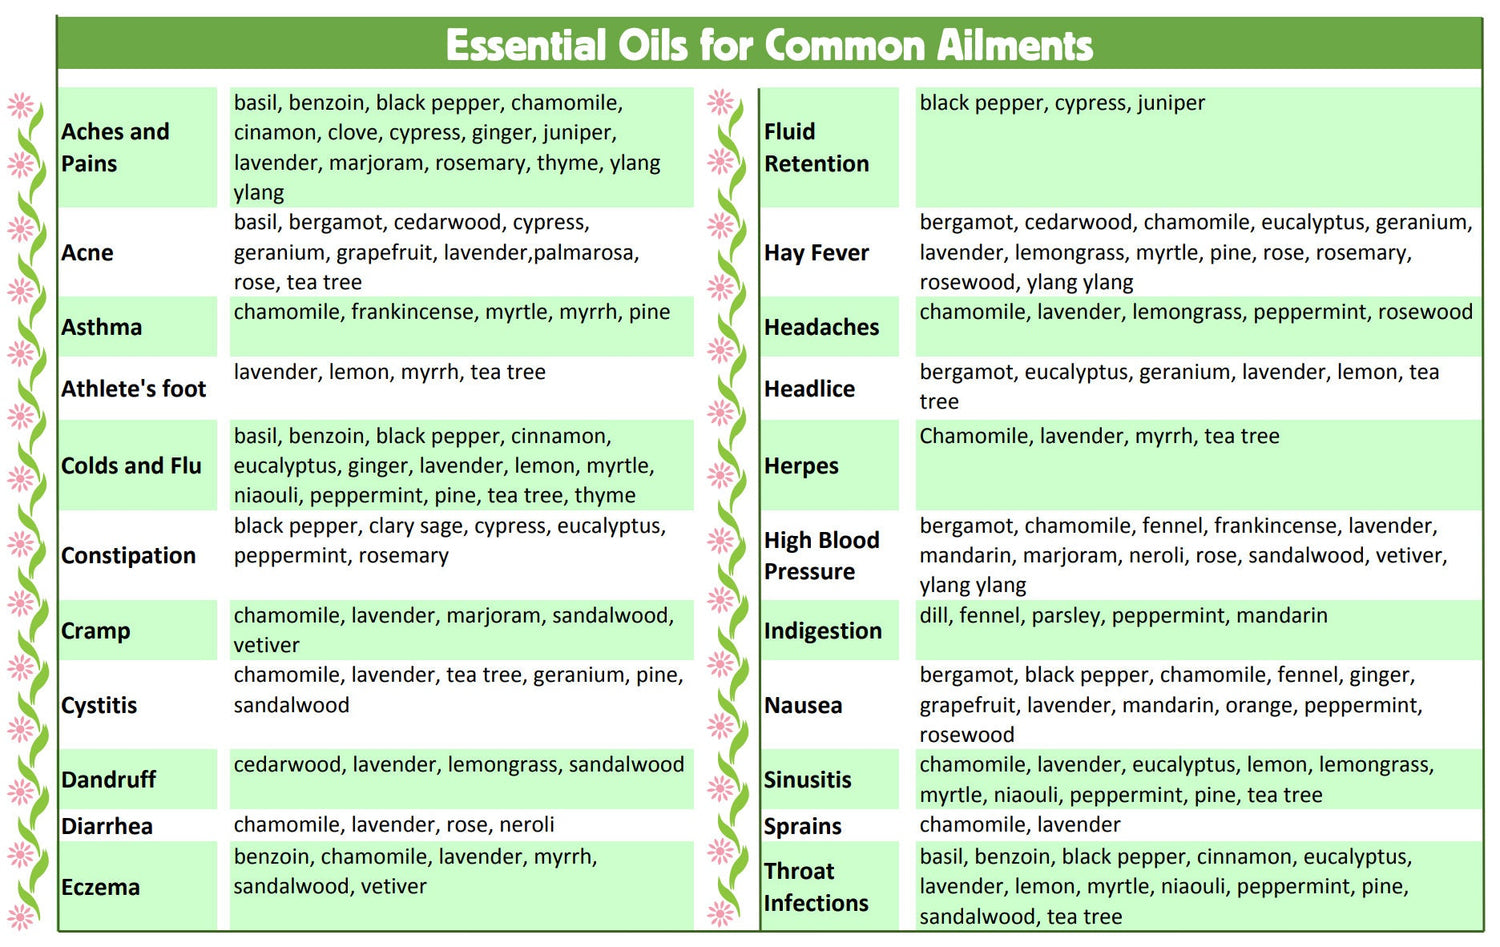 Eucalyptus Lemon Essential Oil - Premium 100% Natural Therapeutic Grade - Oil Diffuser, Massage, Fragrance, Soap, Candles